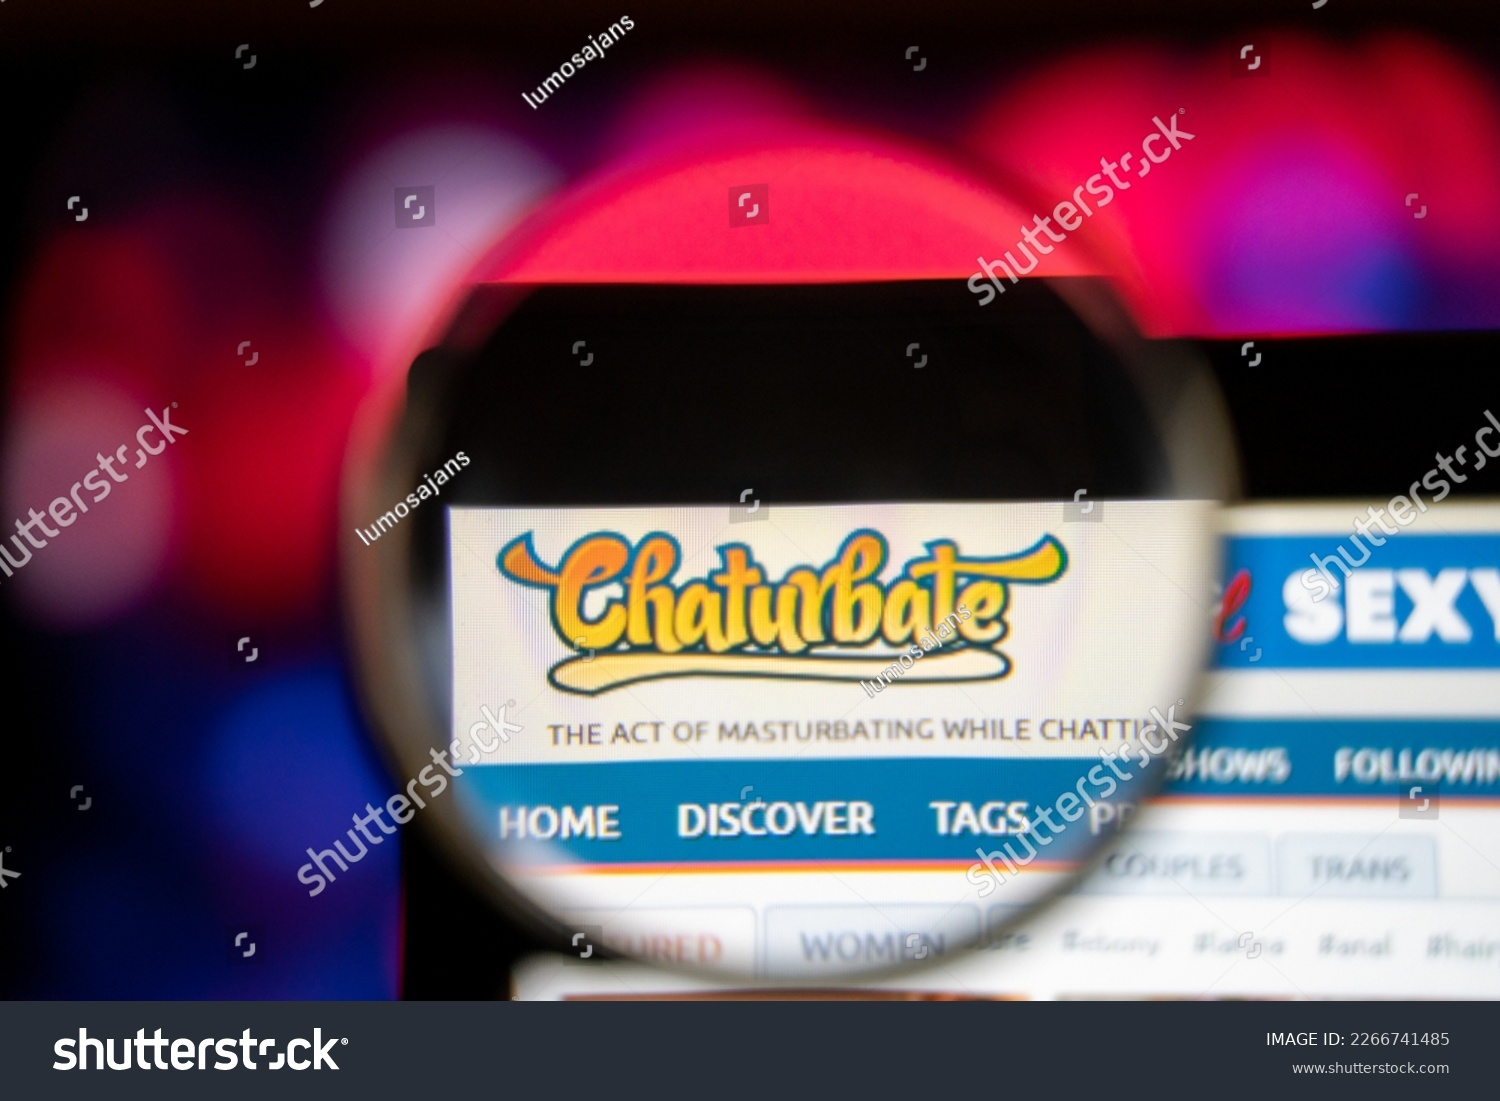 chaturbate token generator android